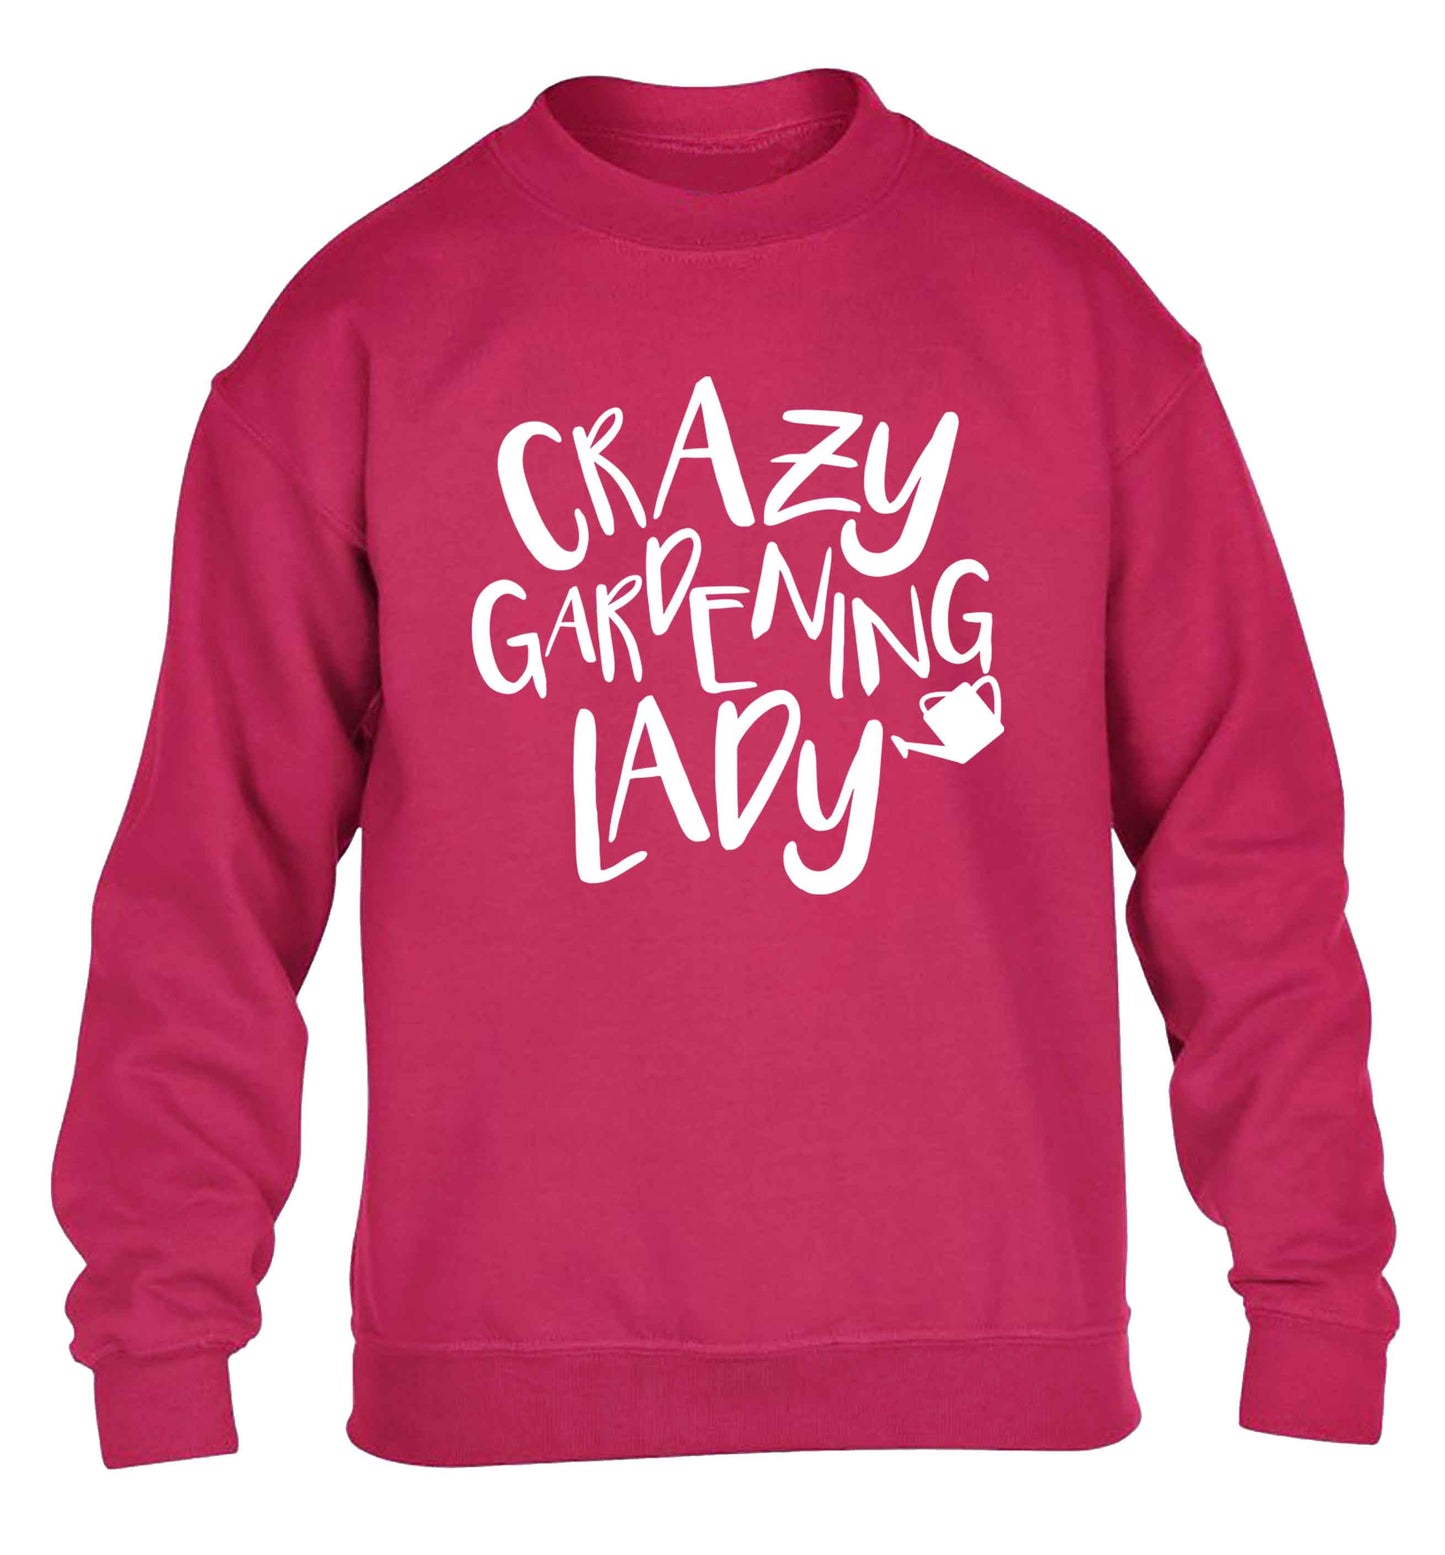 Crazy gardening lady children's pink sweater 12-13 Years